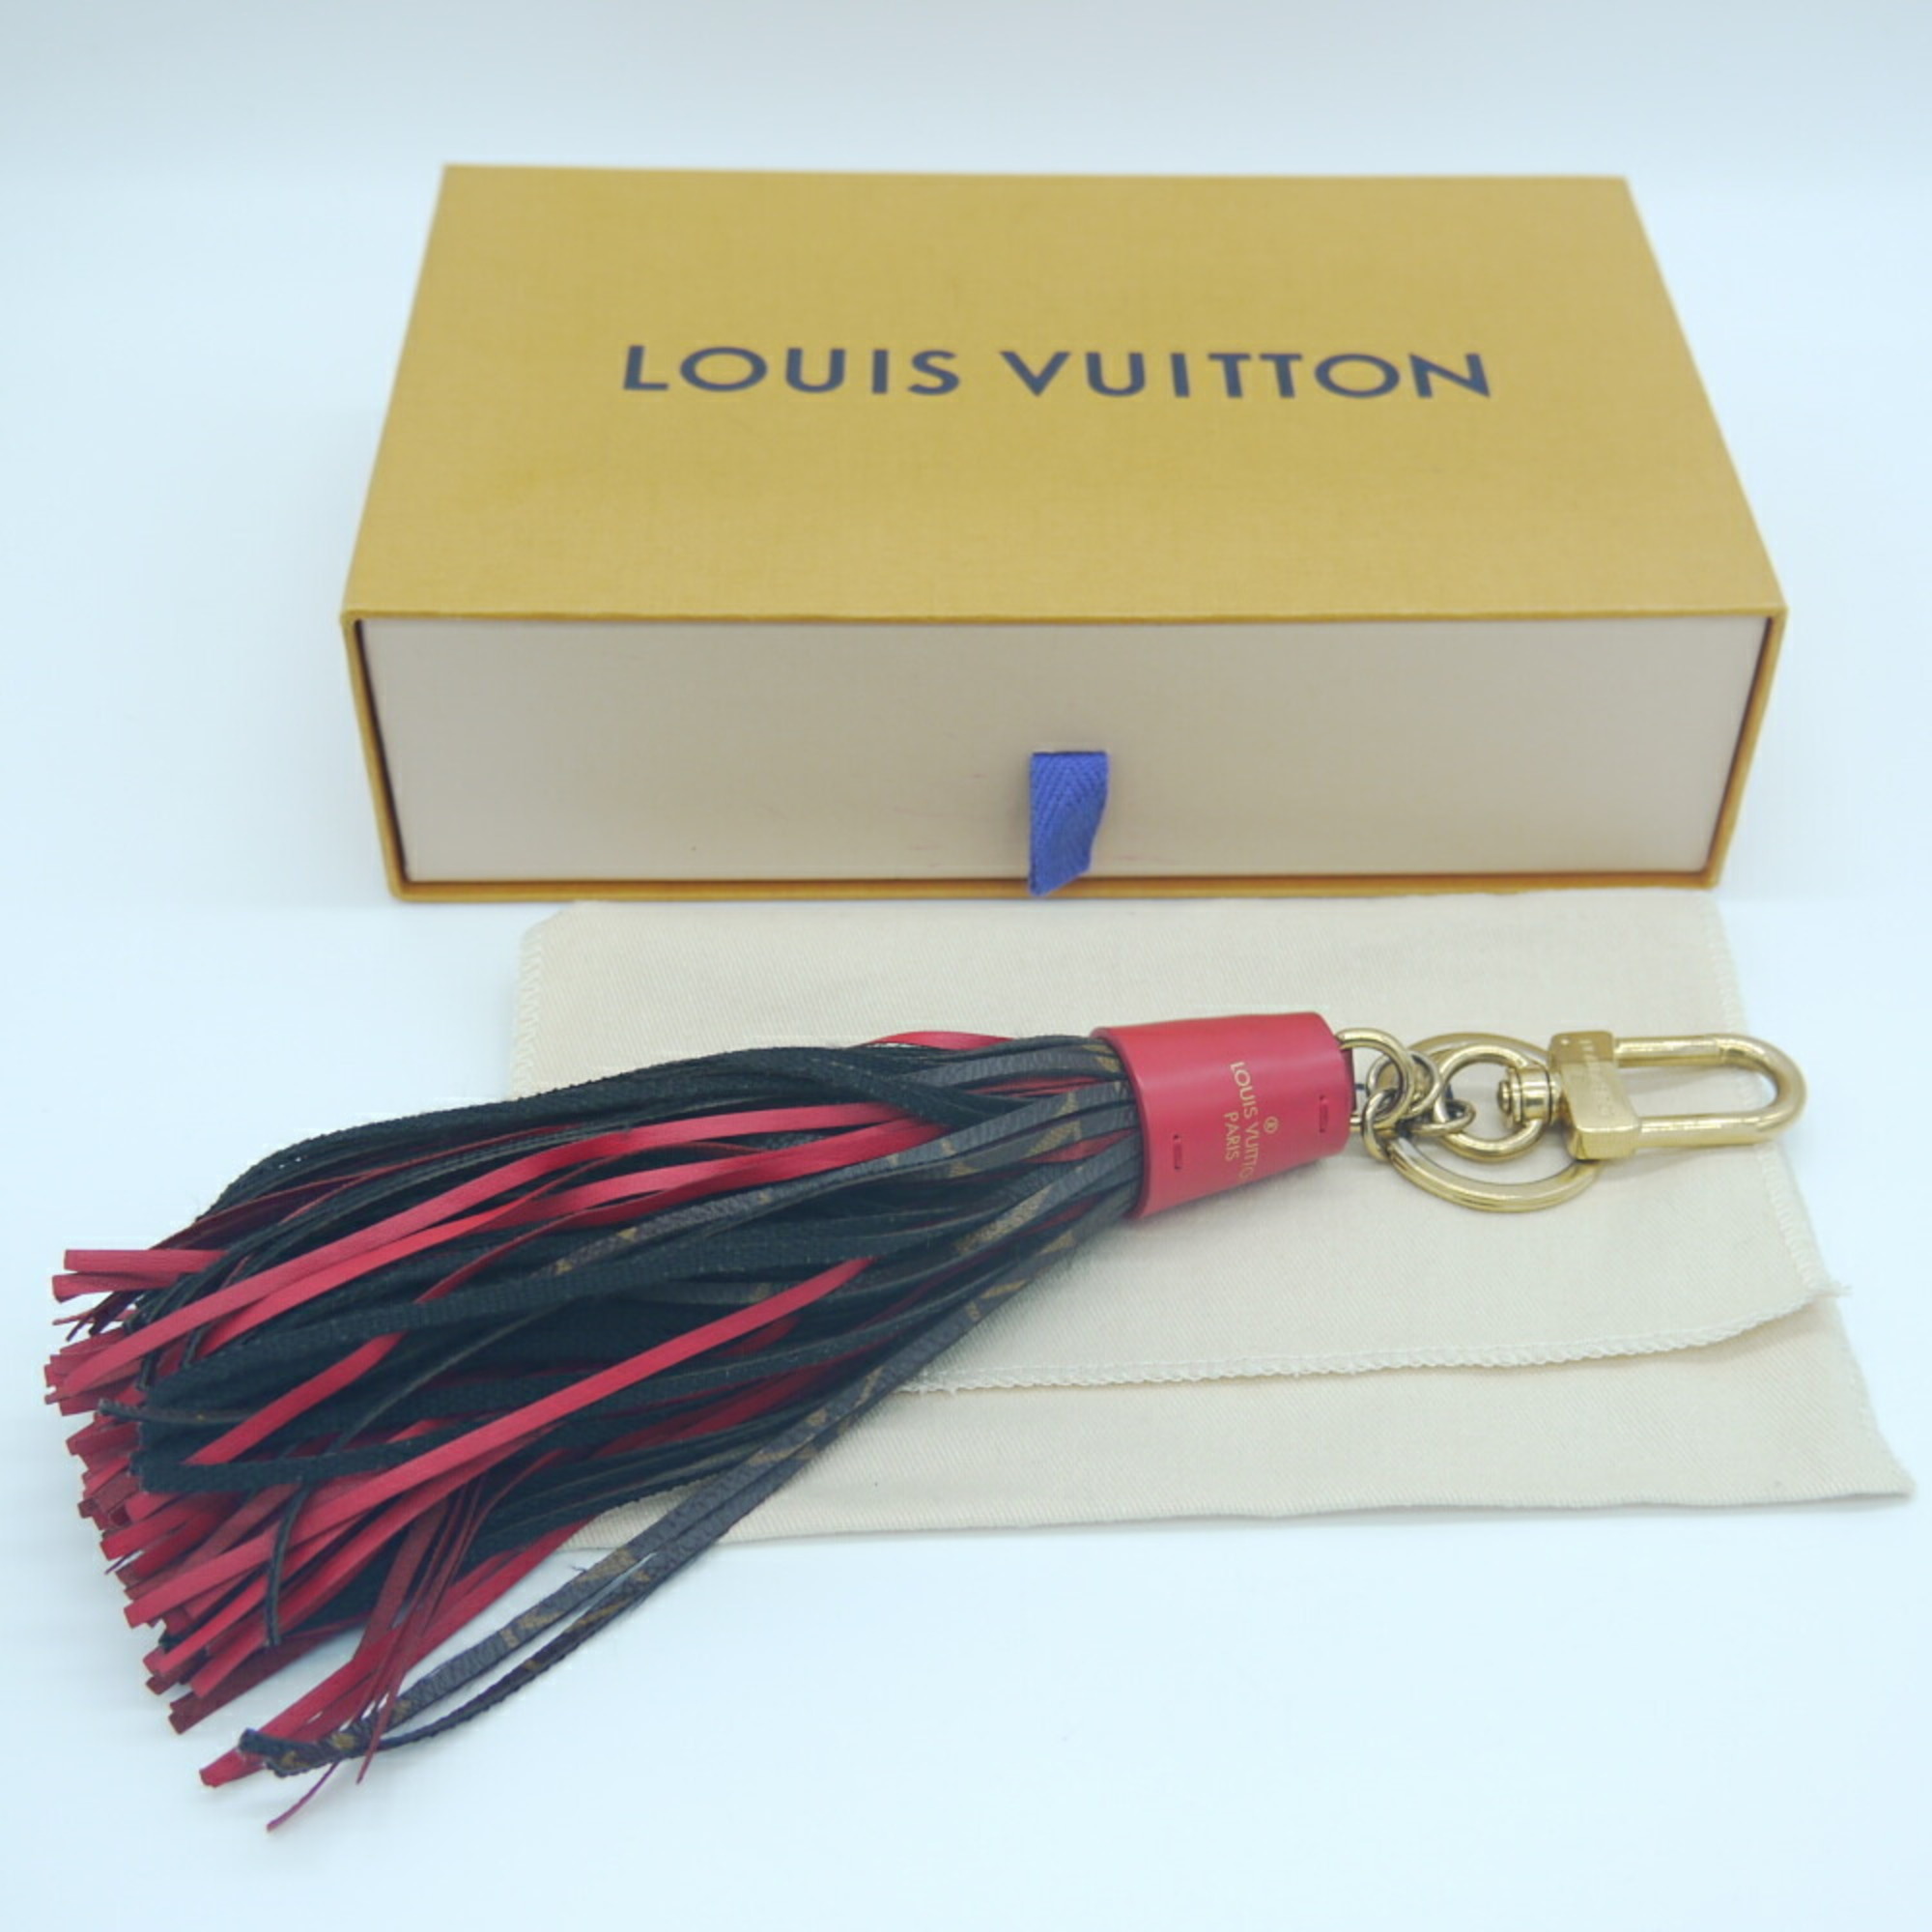 LOUIS VUITTON Louis Vuitton Monogram Tassel Bag Charm M78616 Keychain